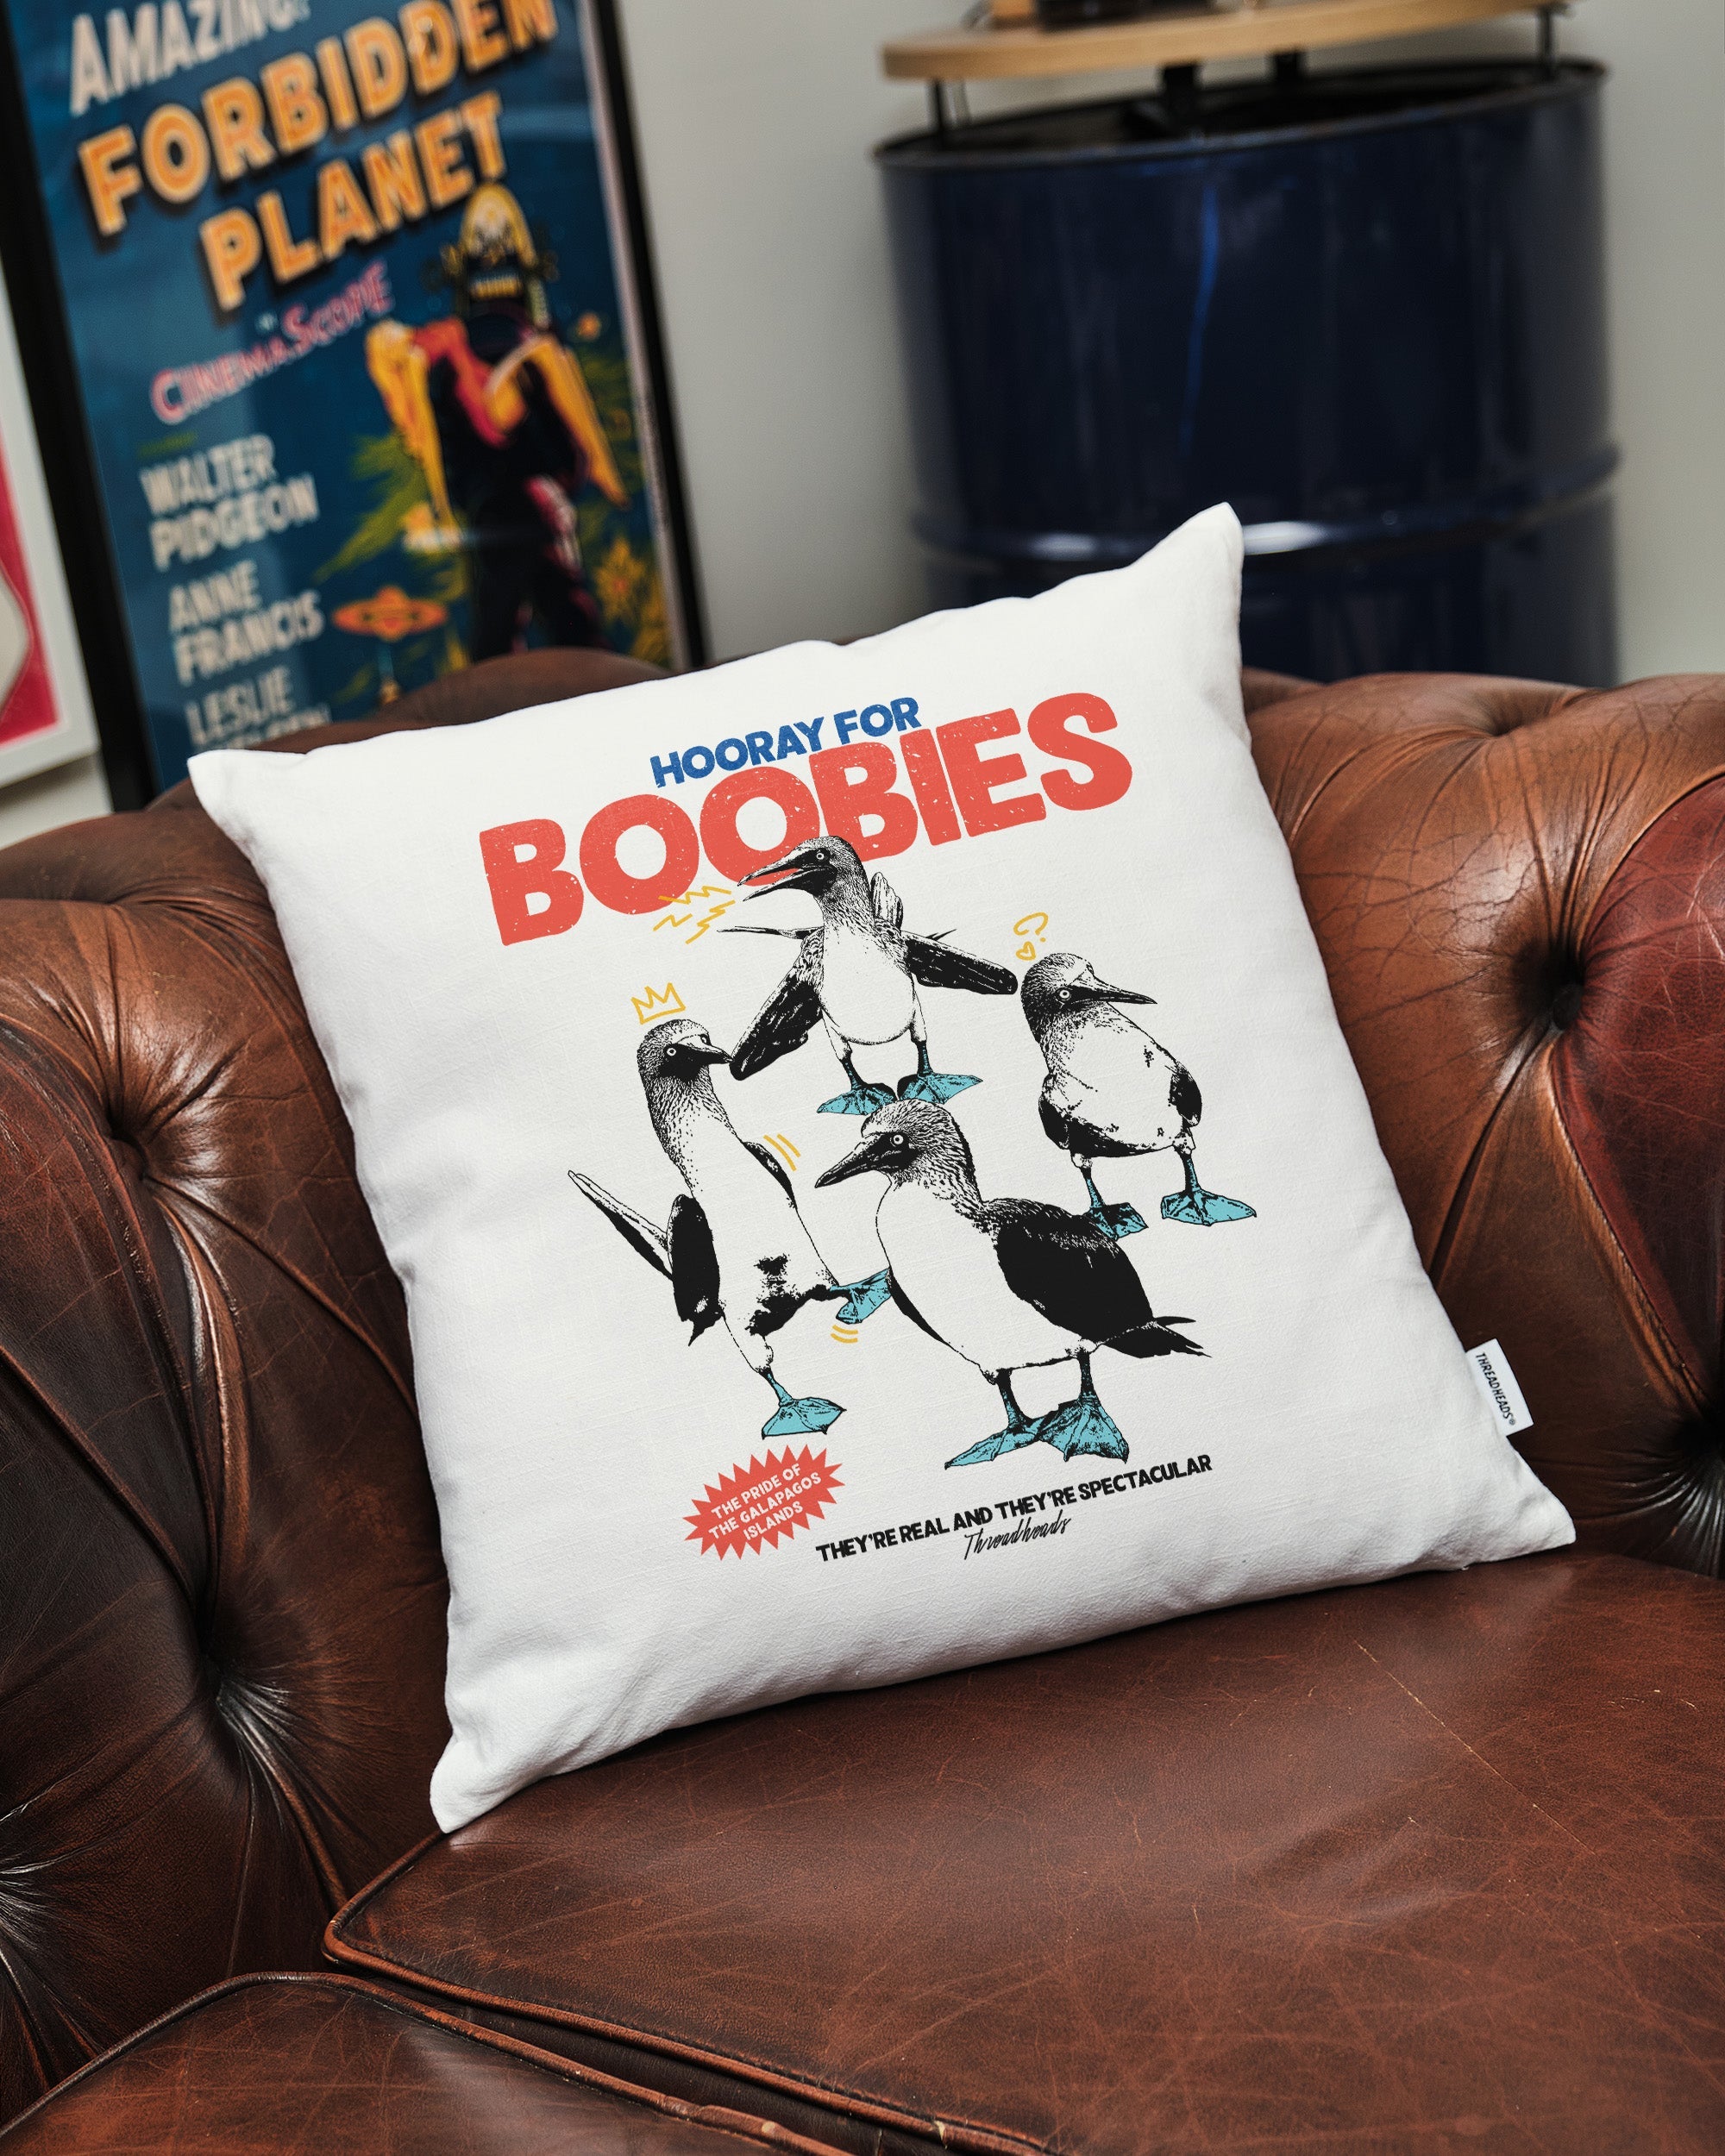 Hooray for Boobies Cushion Australia Online White